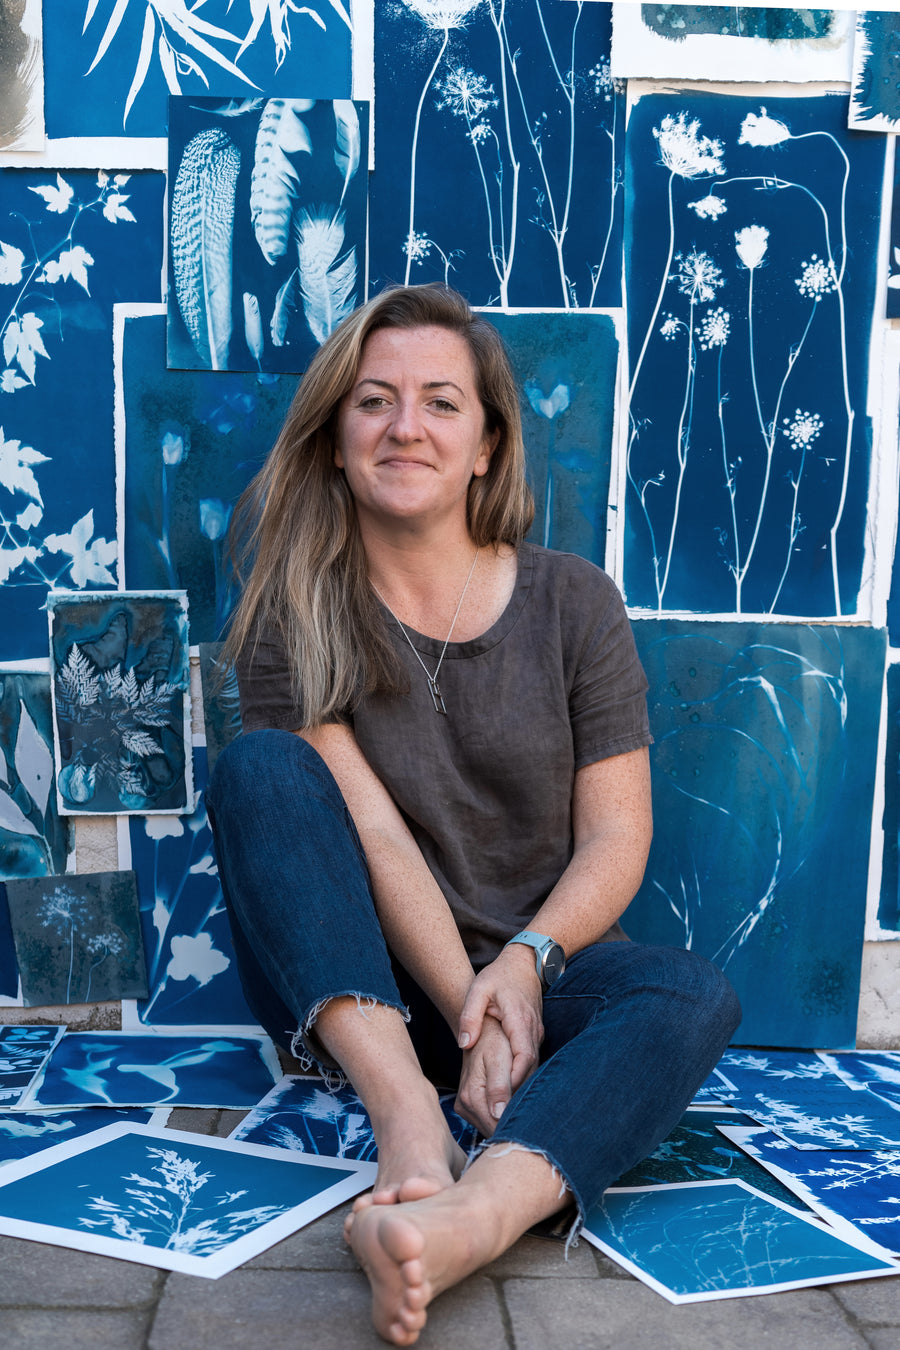 Jane Win Artist Spotlight: Atwater Designs' Sarah Bourne Rafferty